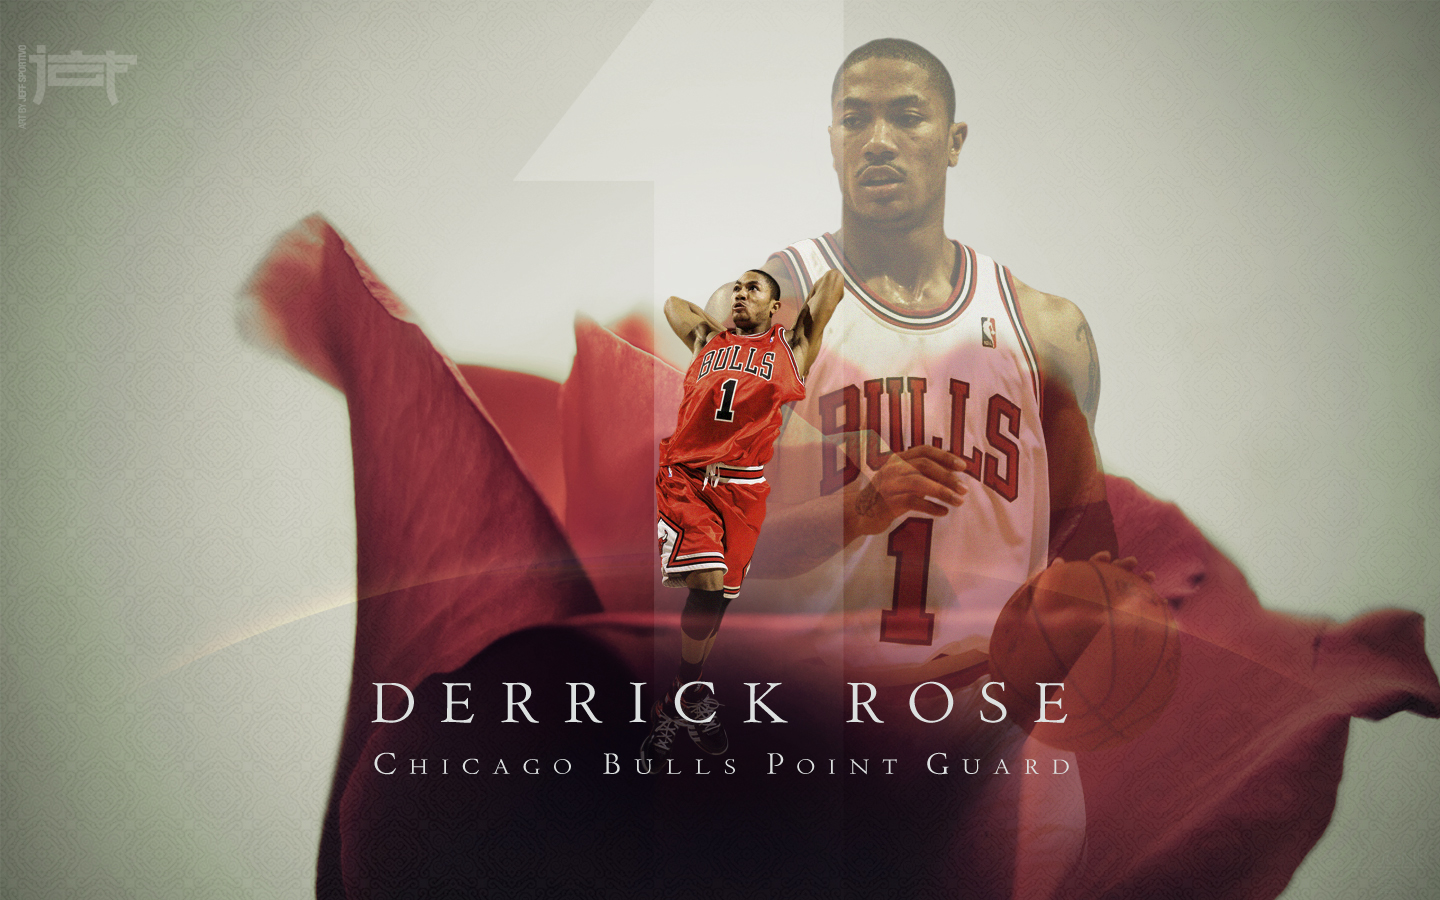 Derrick Rose Basketball Wallpaper For Android